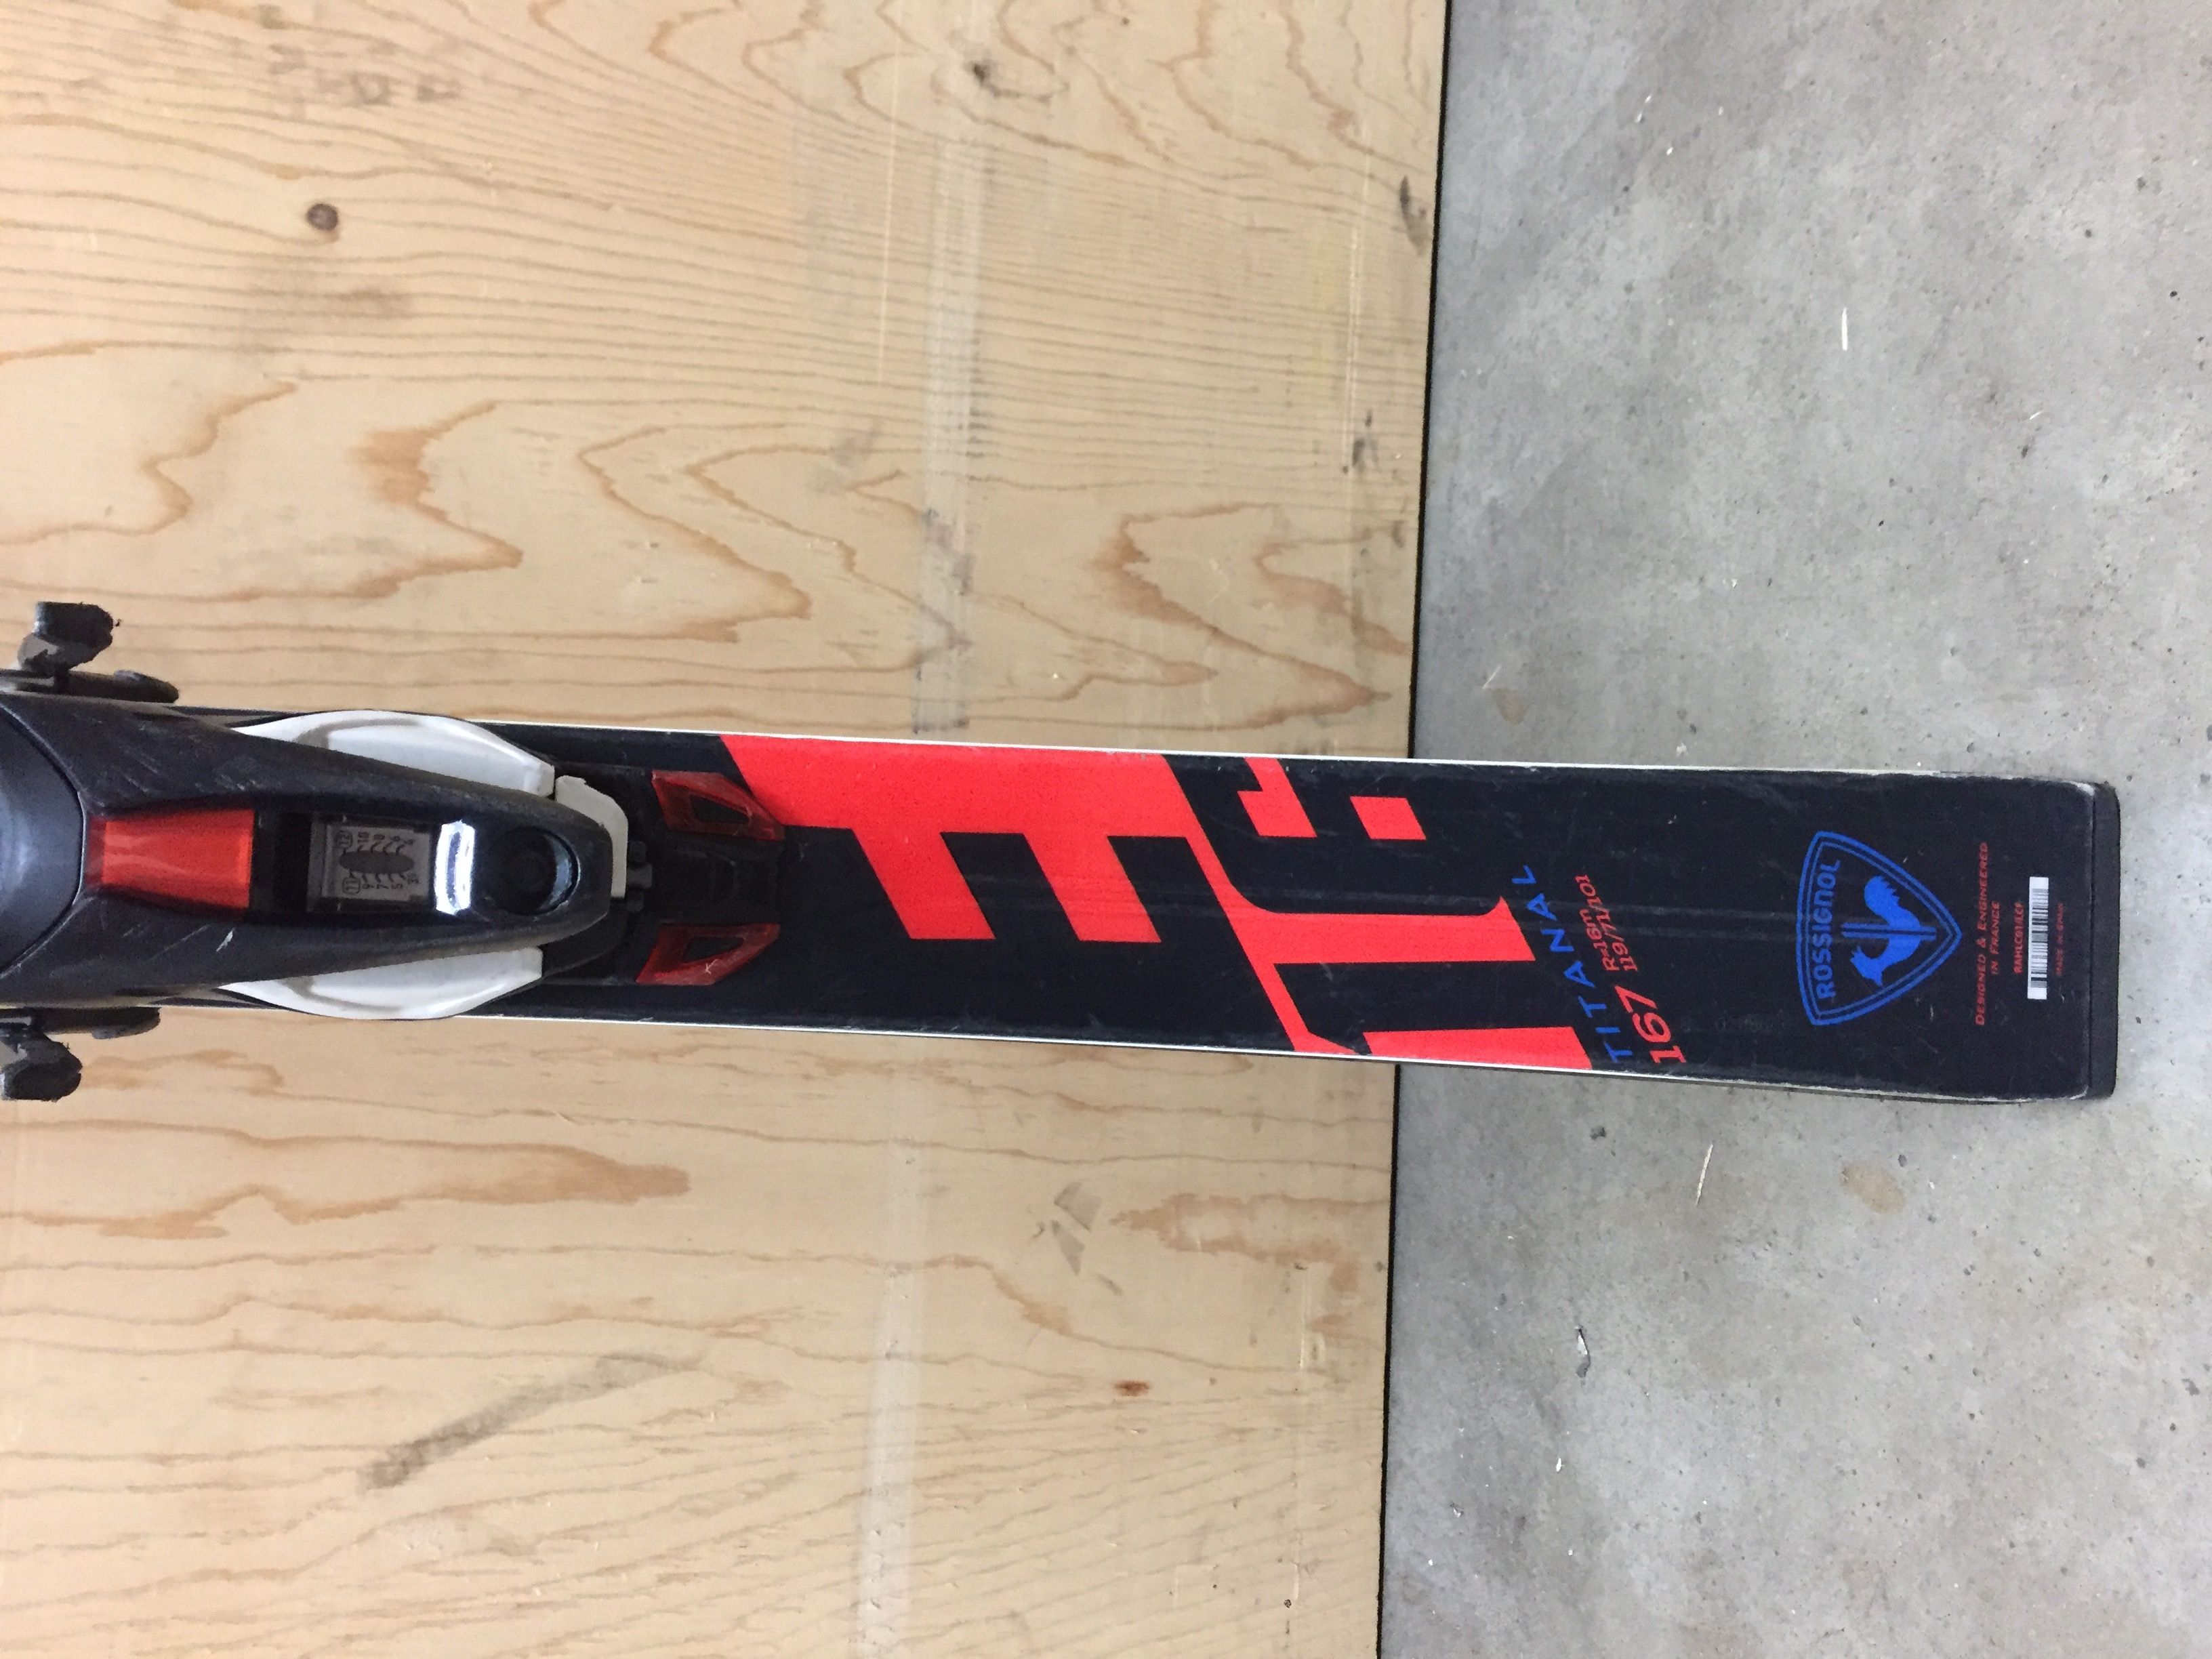 Pack ski Test/Occasion Hero Elite LT TI 2020 + Fixations NX12 K.DUAL